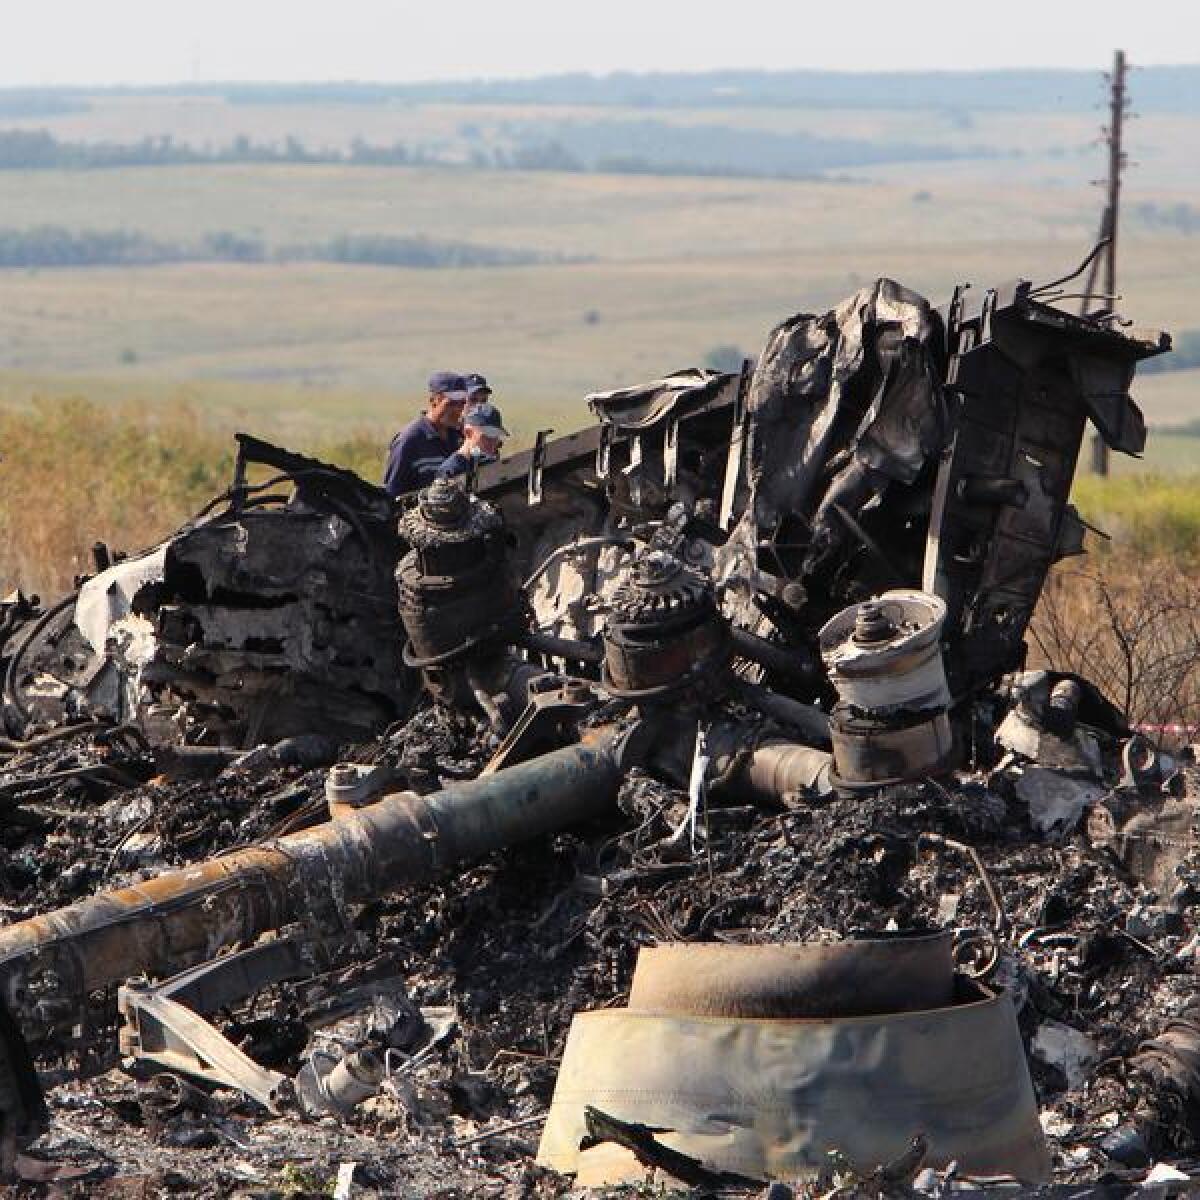 Debris at the main crash site of MH17 in eastern Ukraine in 2014